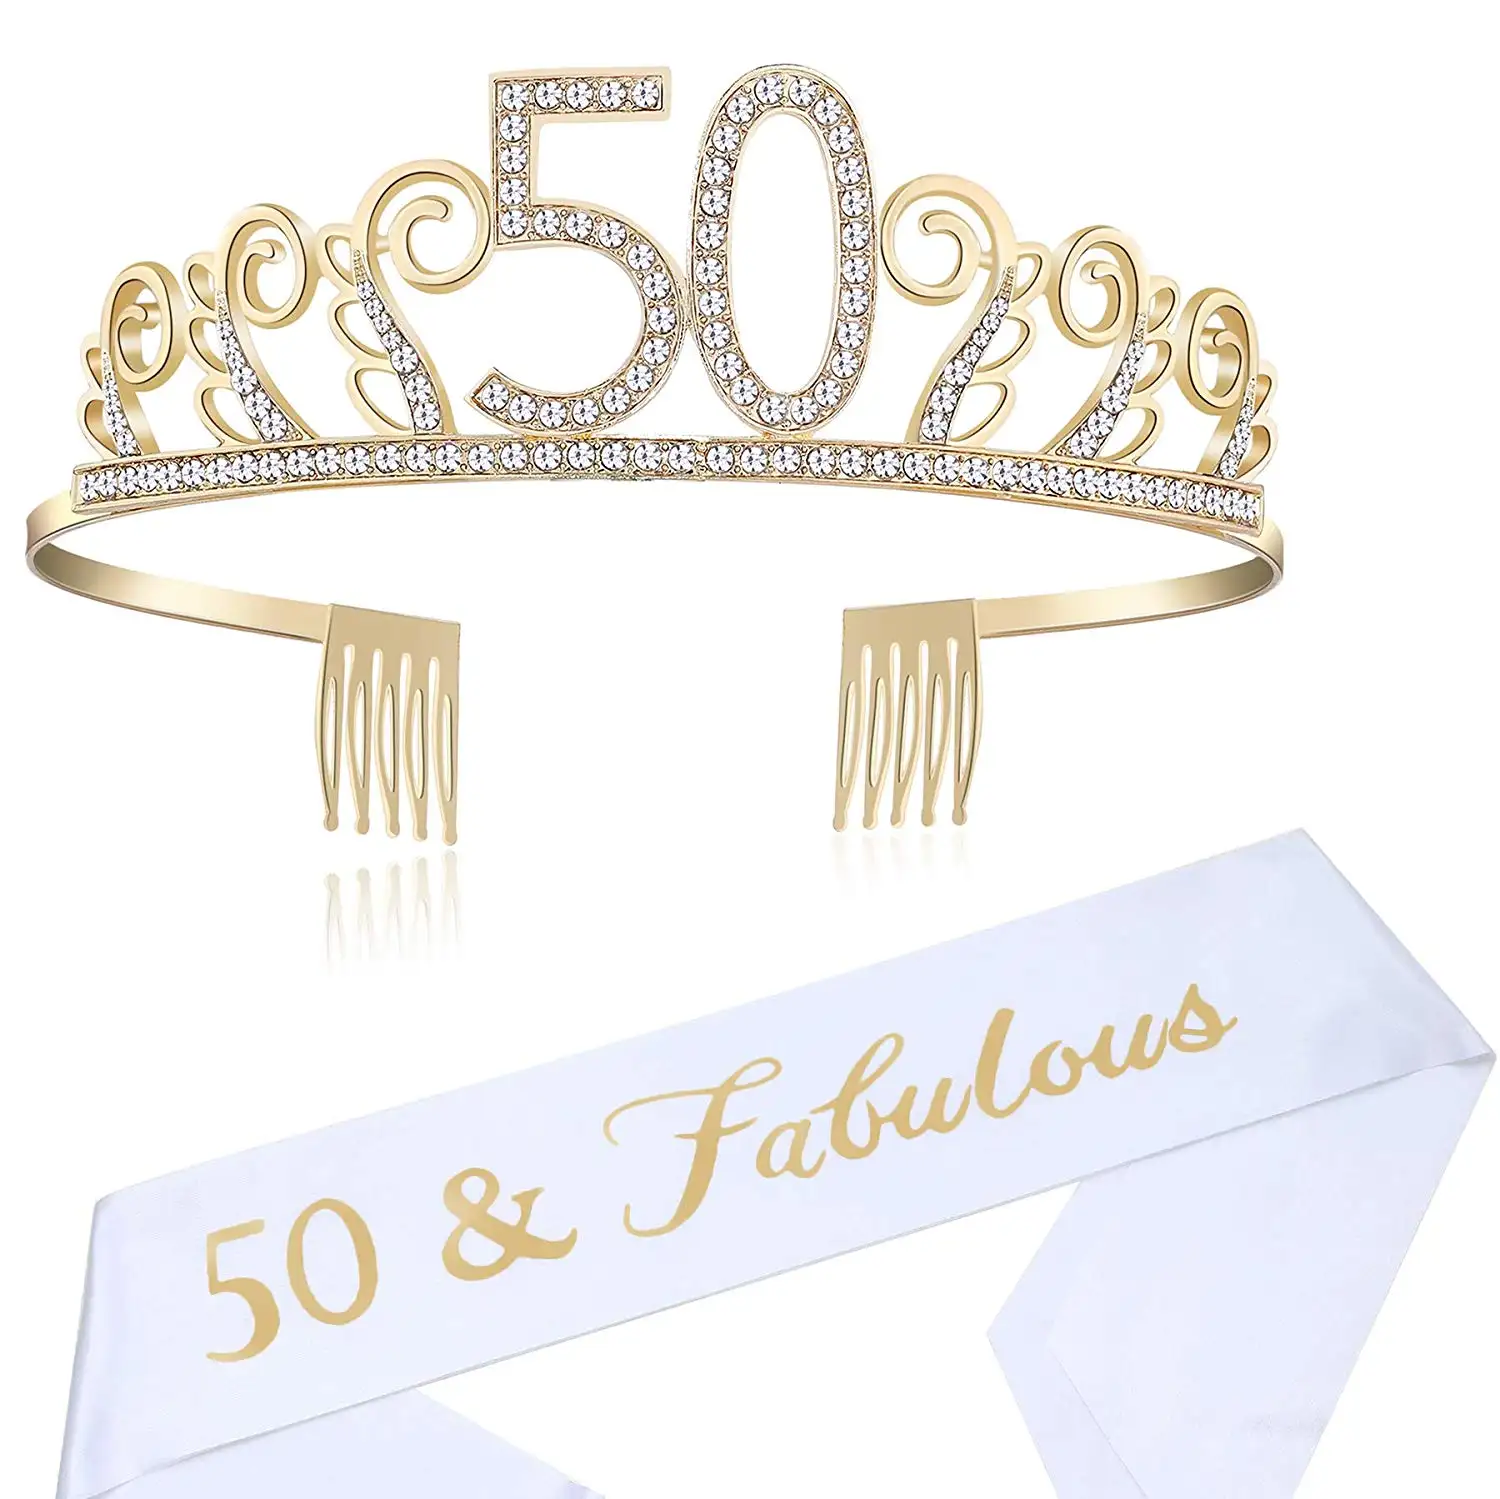 Lima Puluh Kustom Rhinestone Ulang Tahun Mahkota untuk Orang Dewasa Ulang Tahun Tiara Crown Ikat Headband Tiara